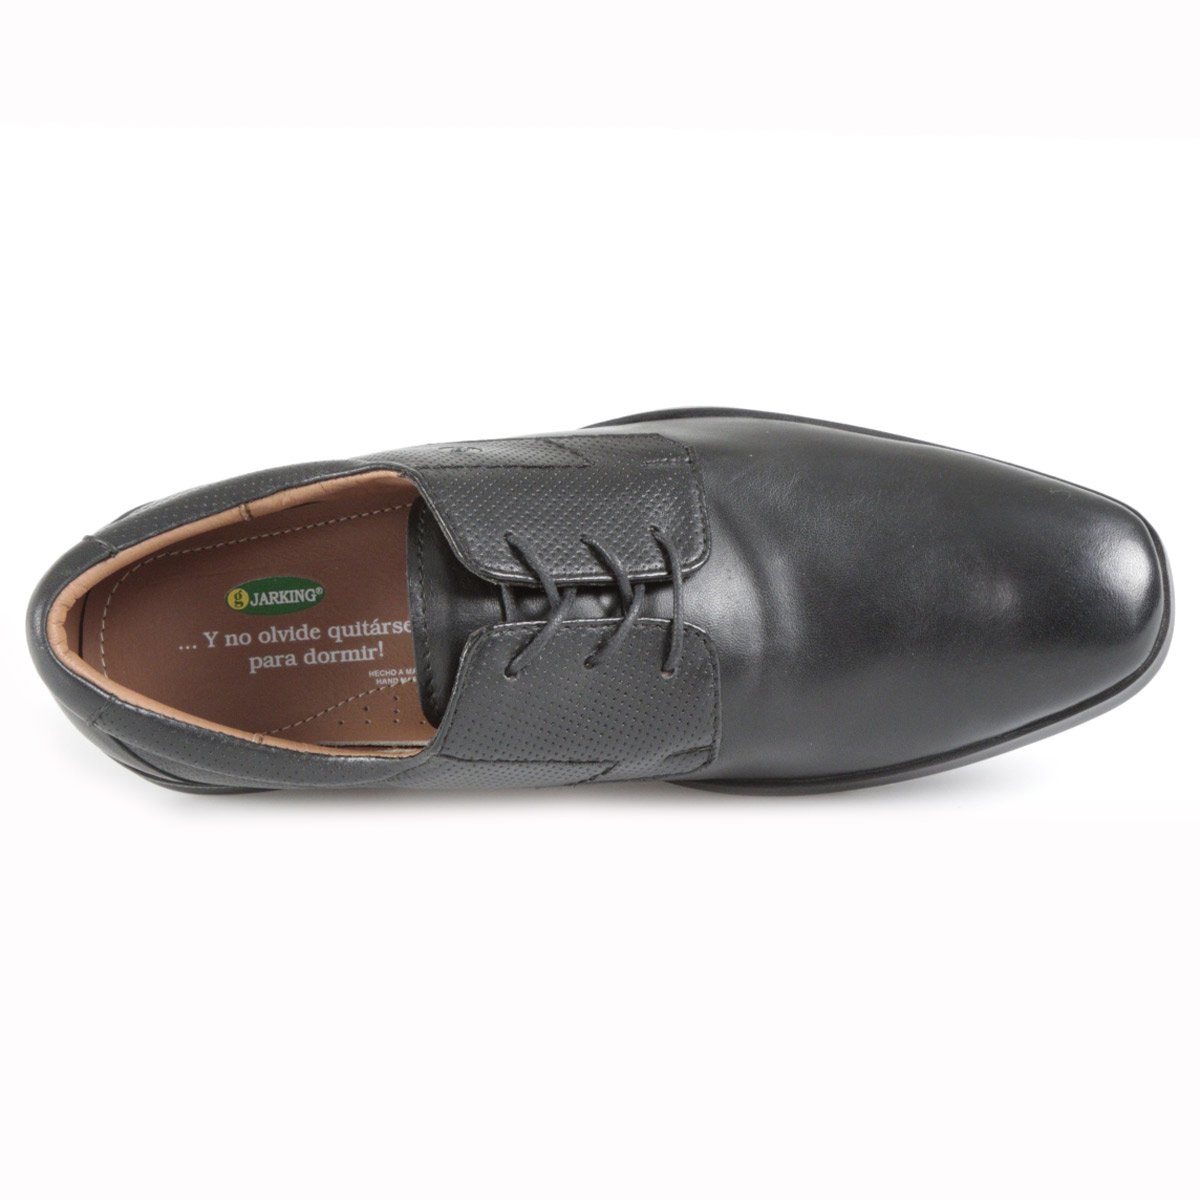 Zapato Confort Jarking 5200 N